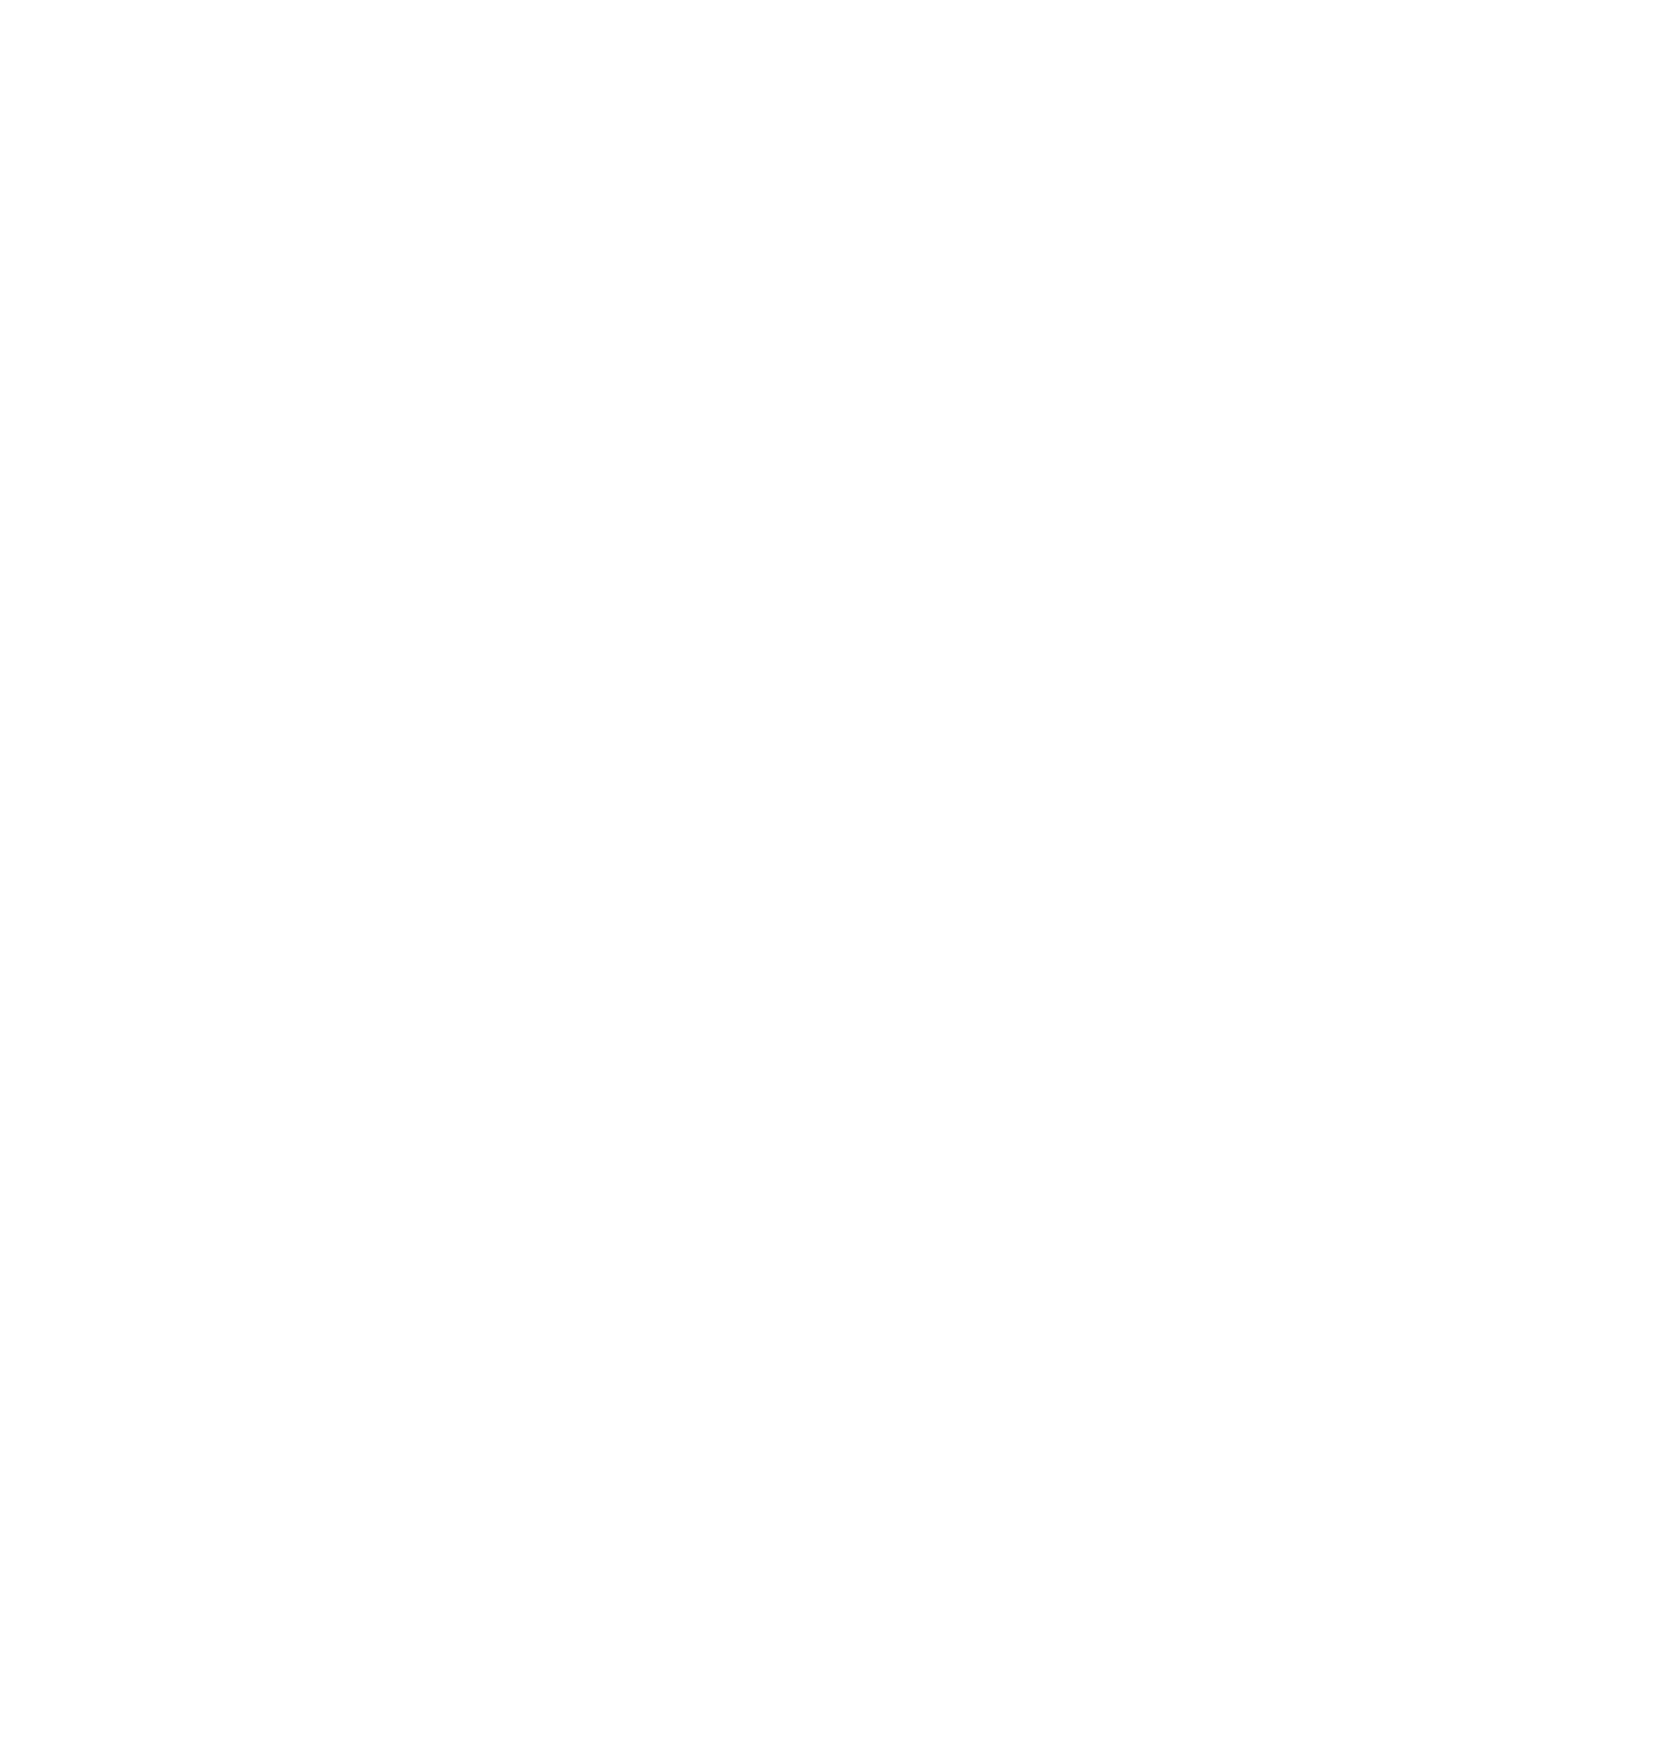 Hotel Boutique La Tartana